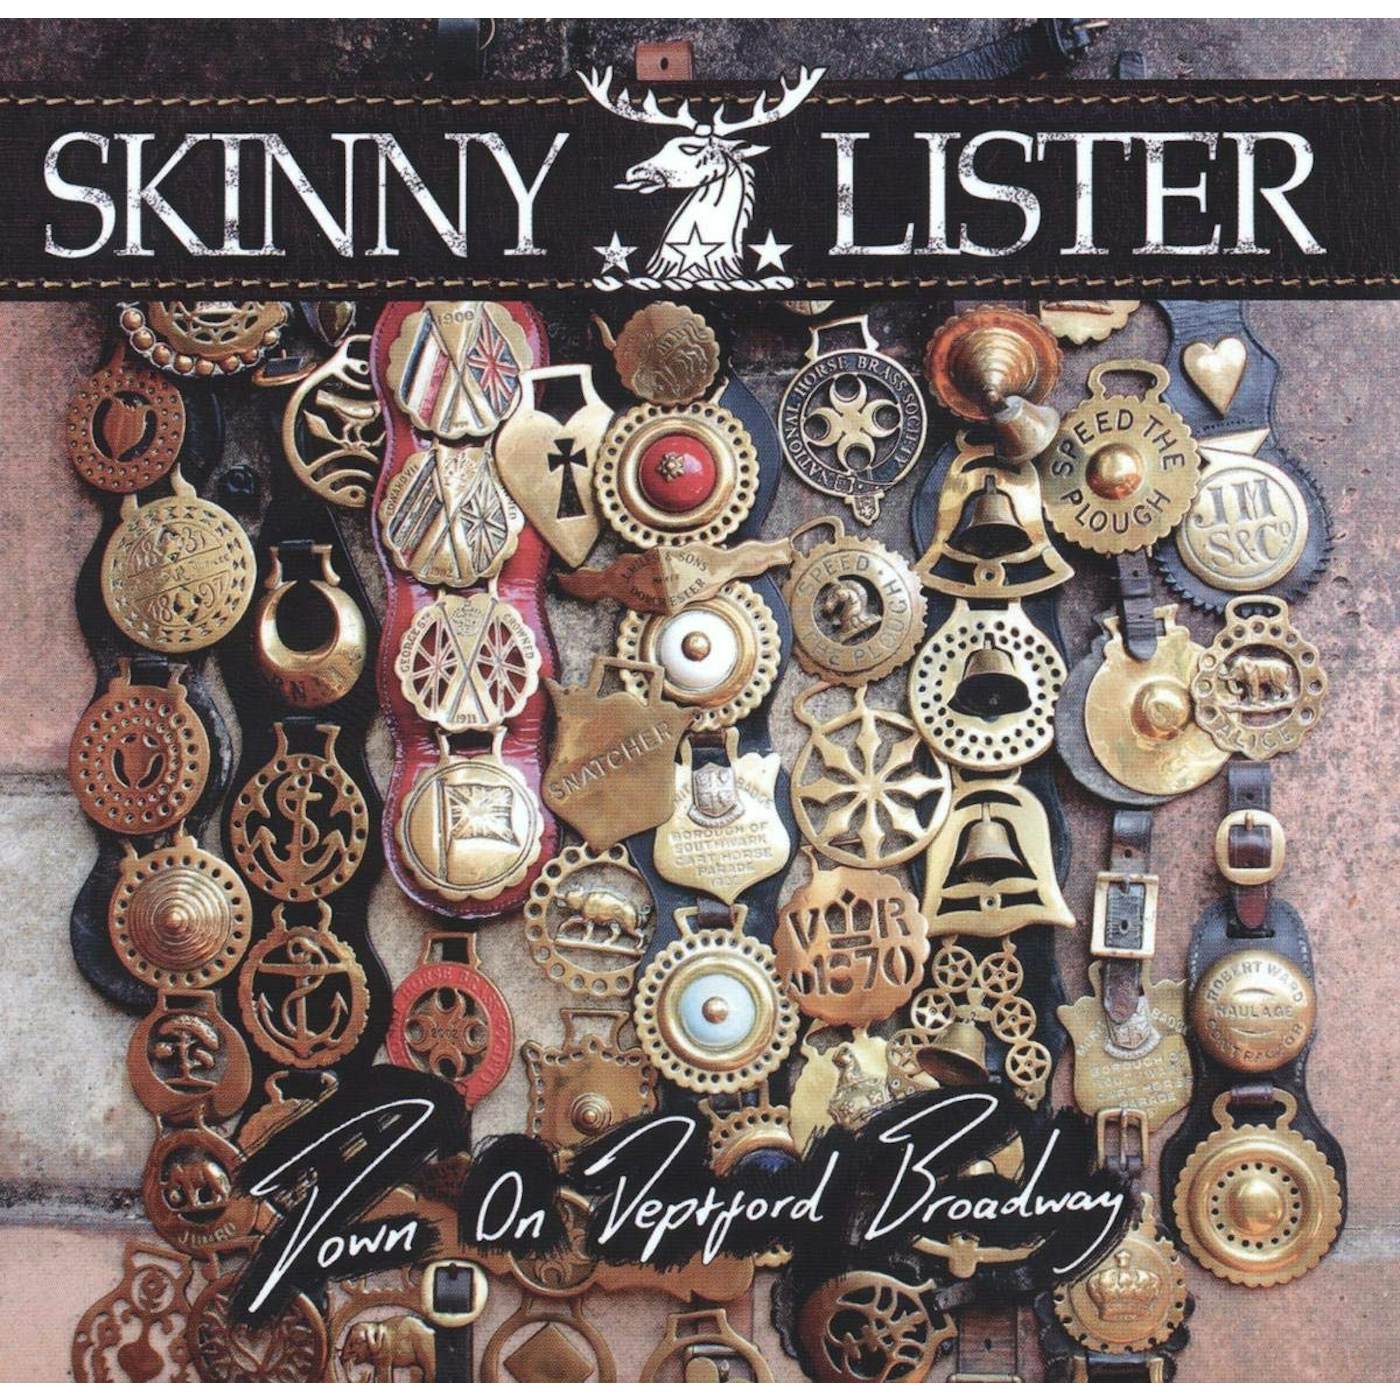 Skinny Lister Down on Deptford Broadway Vinyl Record